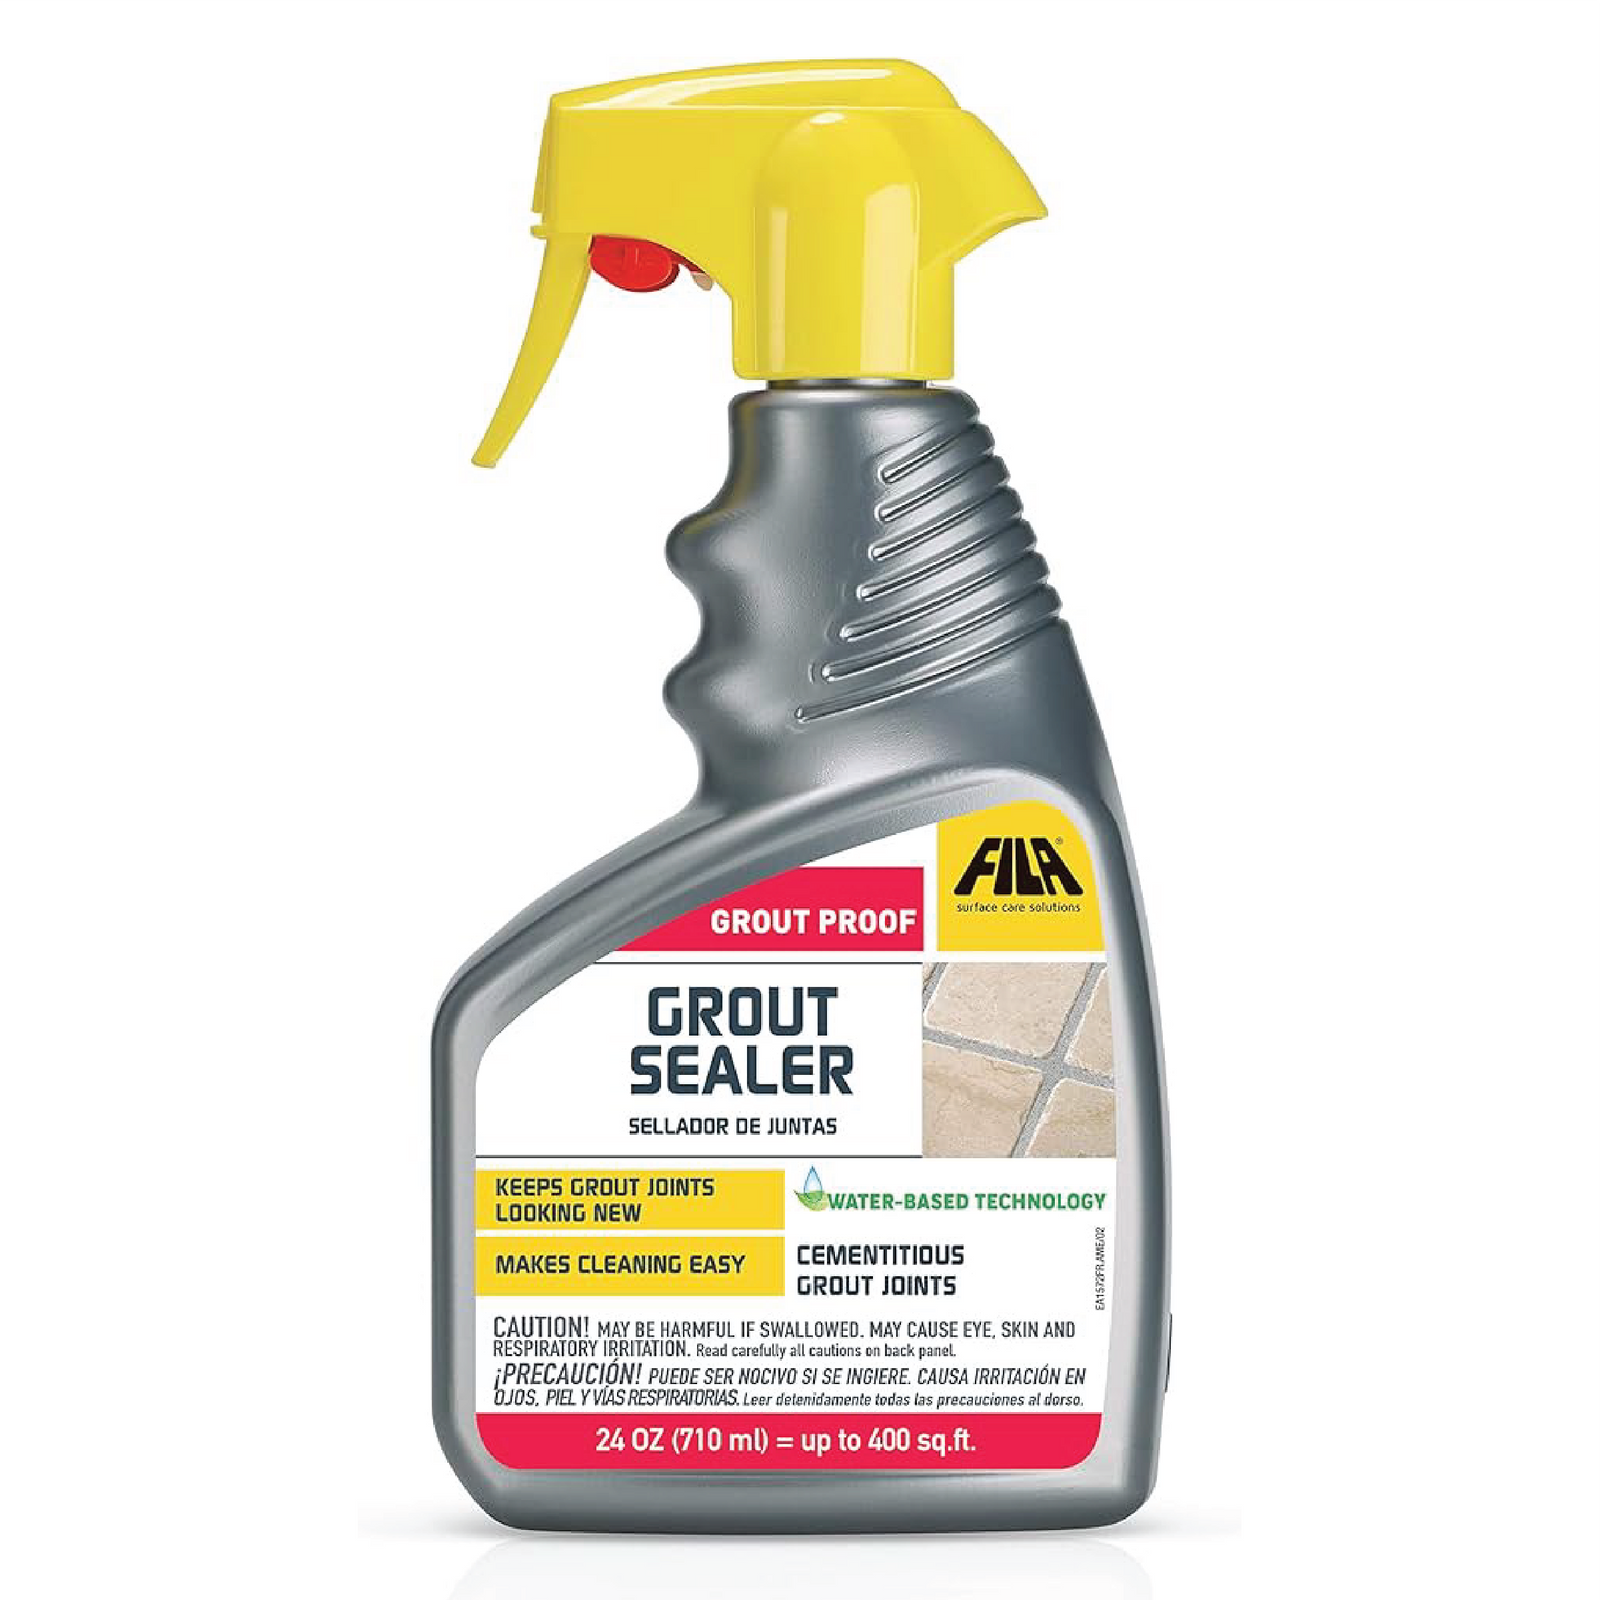 Fila Grout Sealer, GroutProof per 24 Oz Spray Bottle